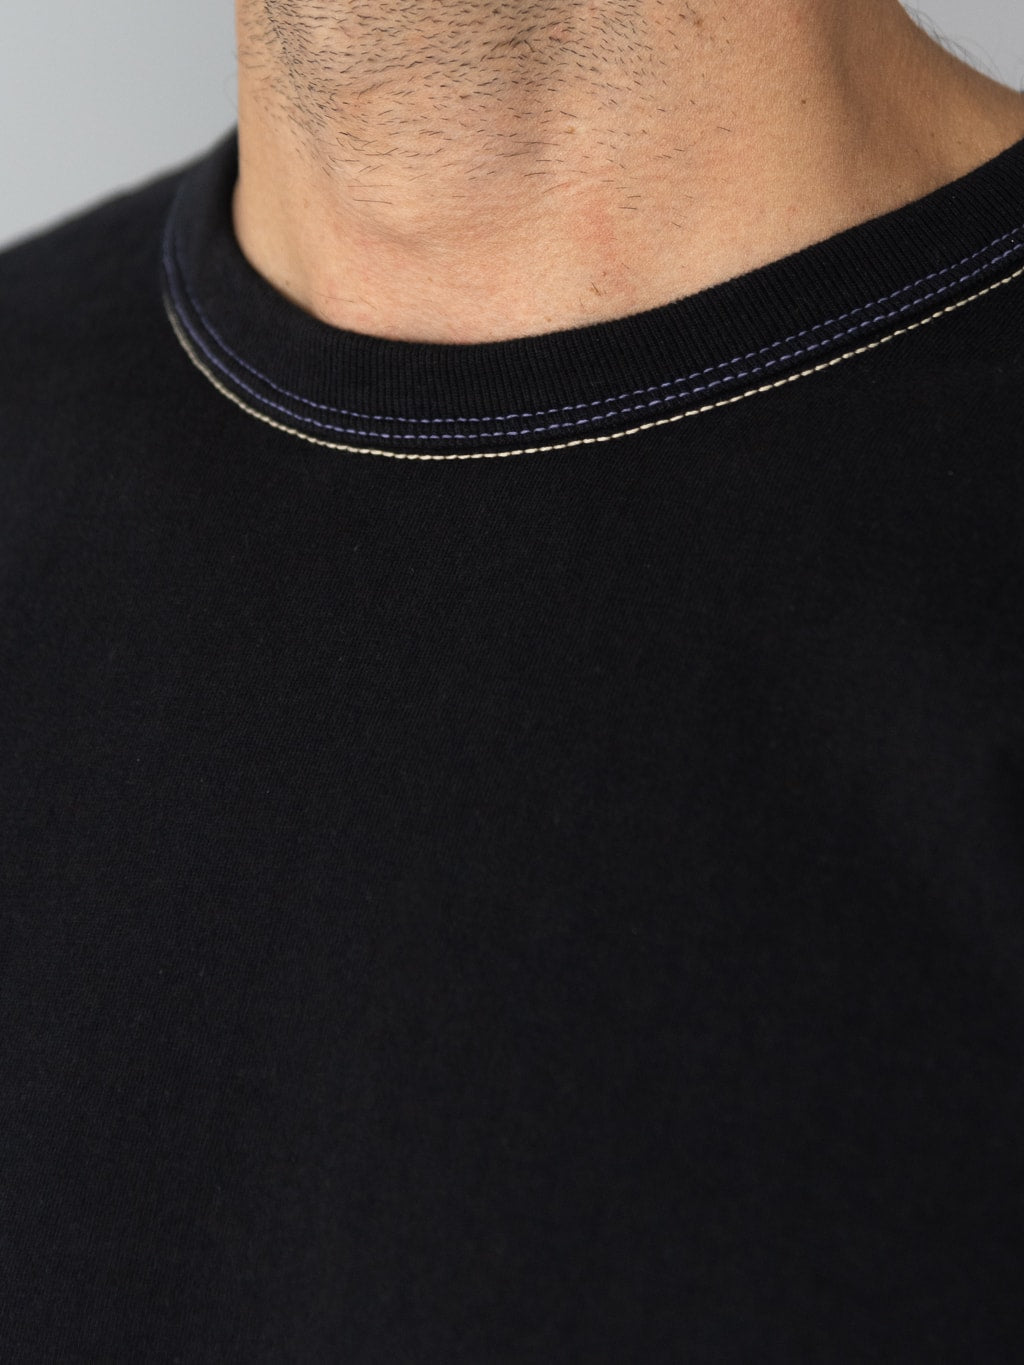 The Flat Head Plain Heavyweight TShirt black collar closeup